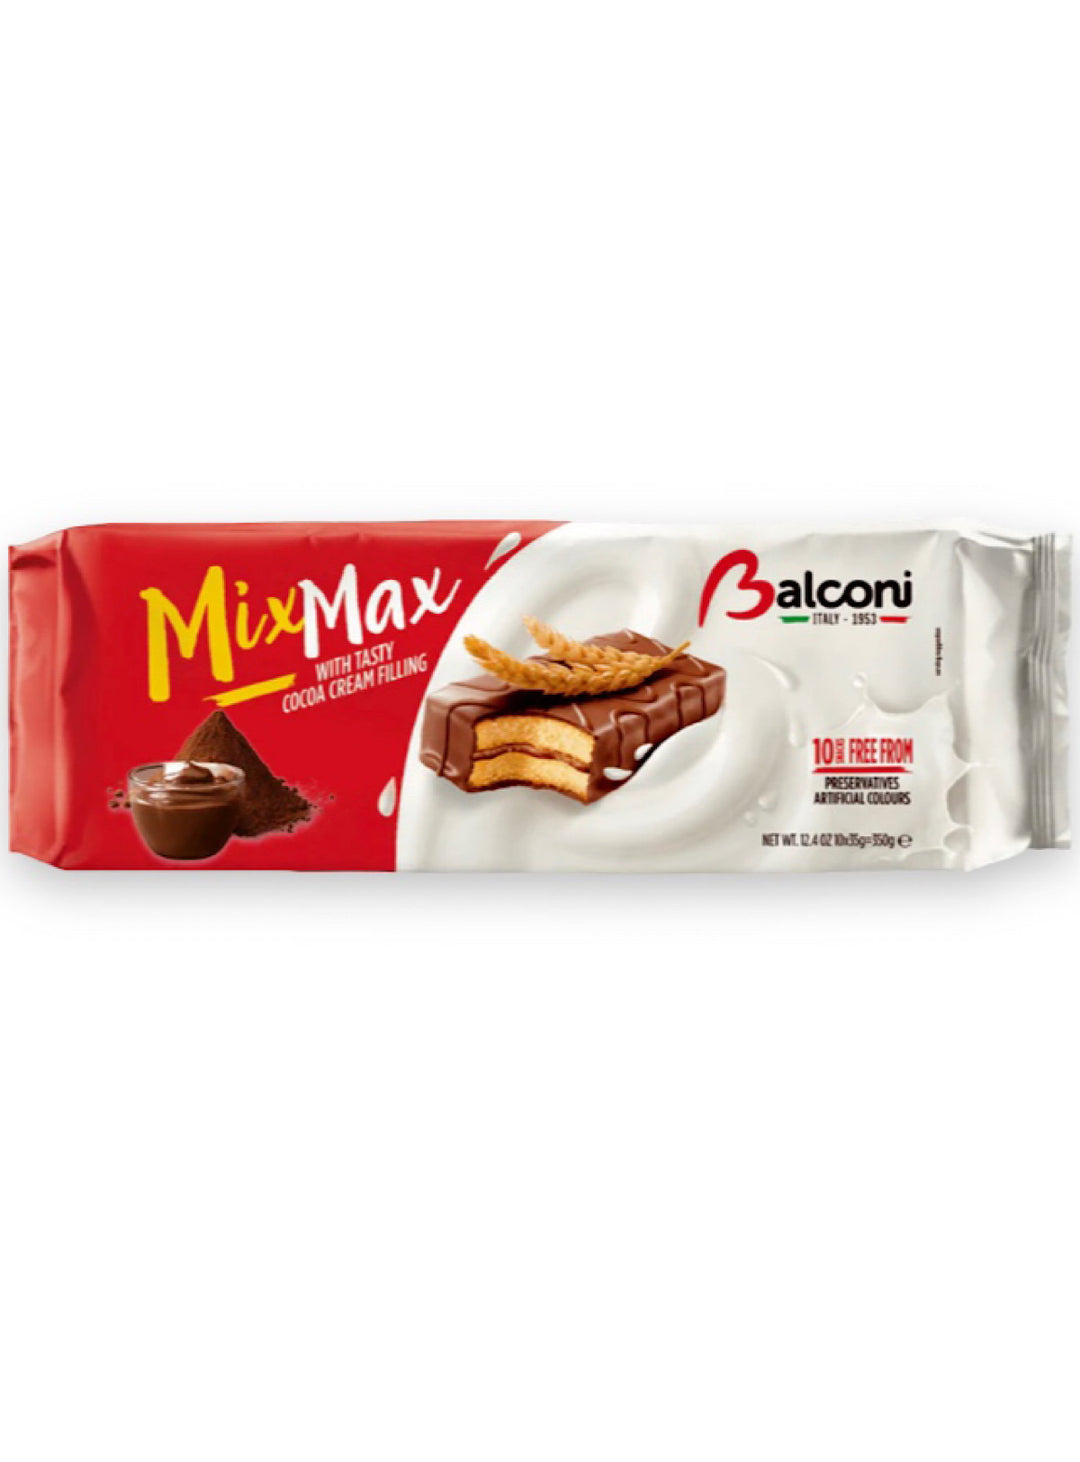 Chocolate Sponge Cake Mixmax - Balconi - 350g